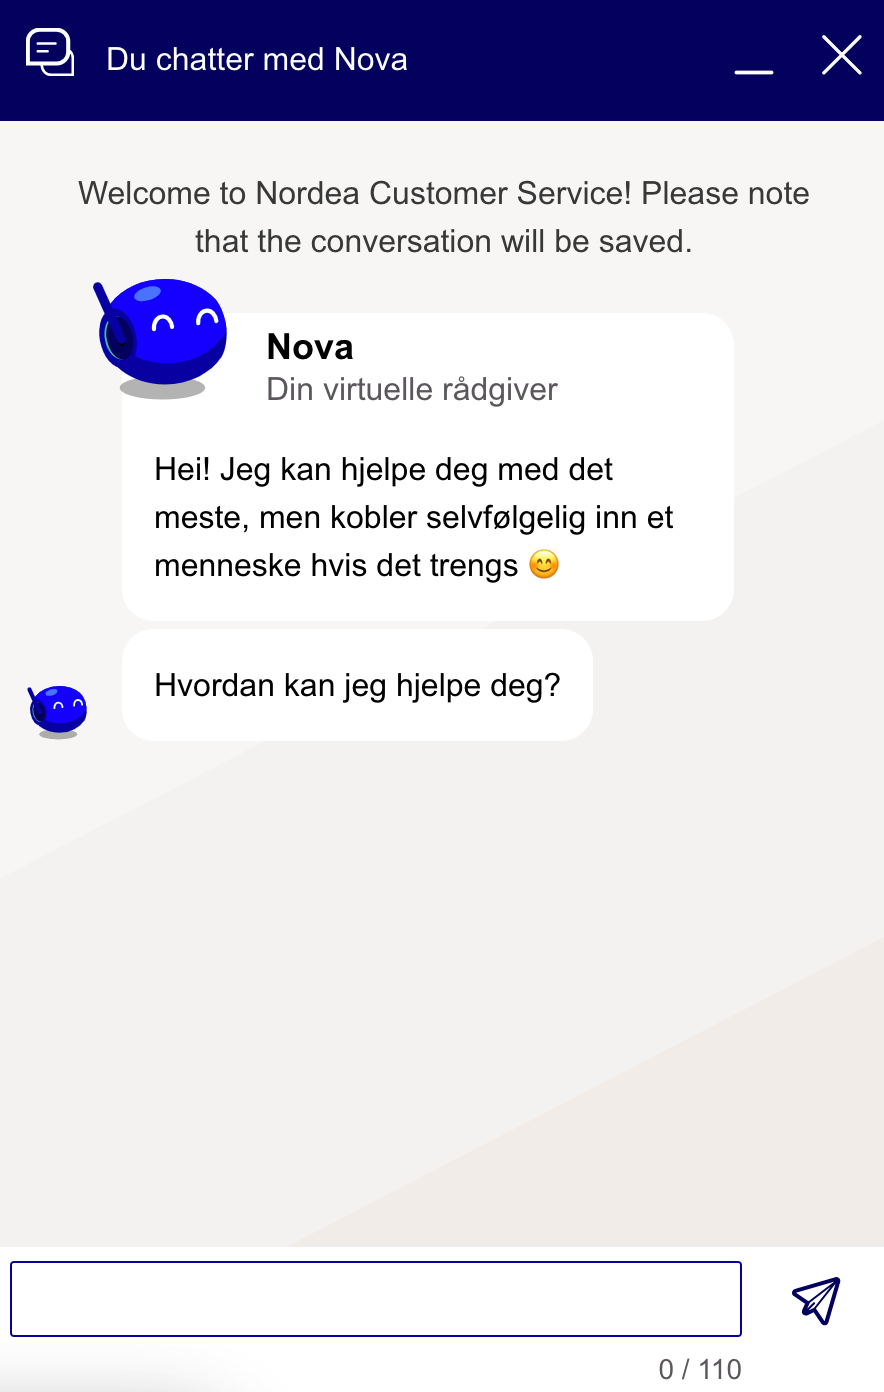 Nordea's chatbot 